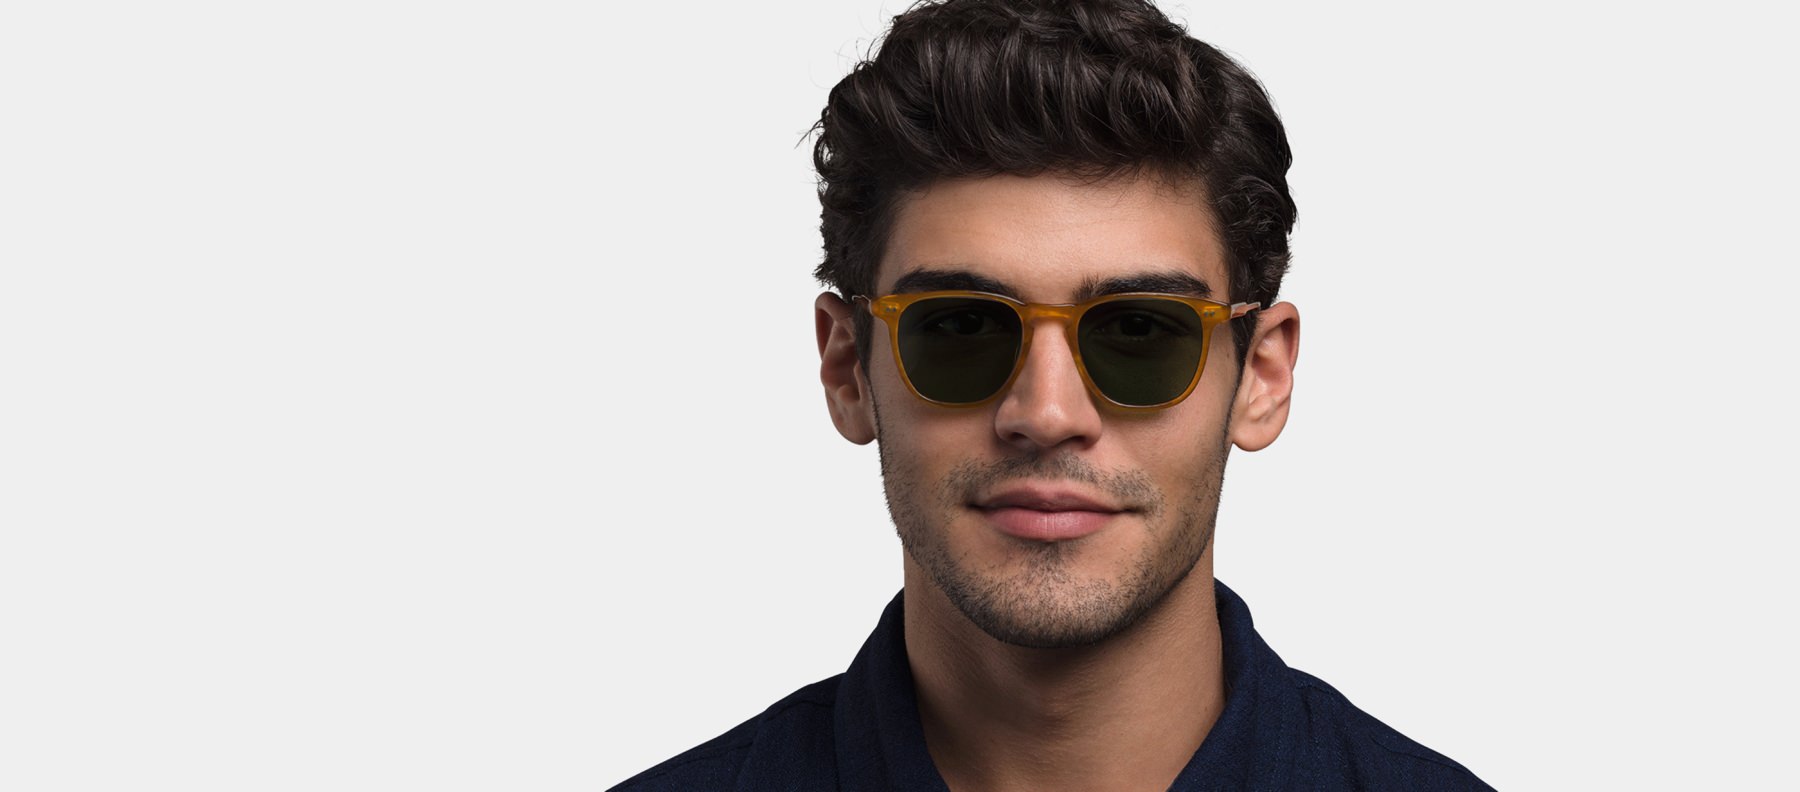 2019 best men's sunglasses